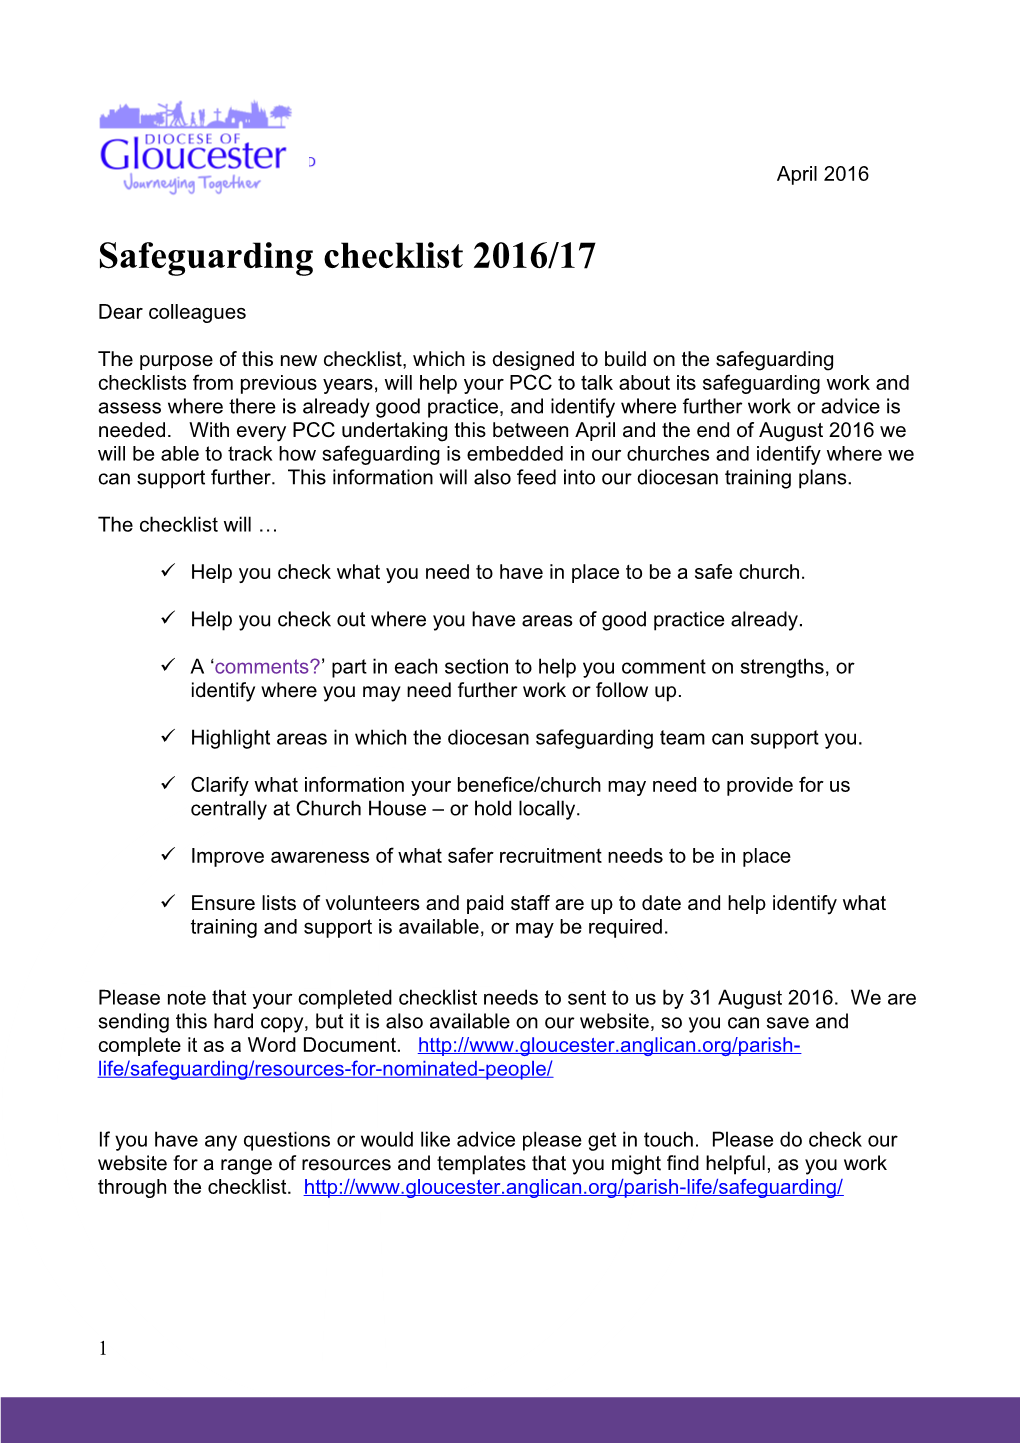 Safeguarding Checklist 2016/17